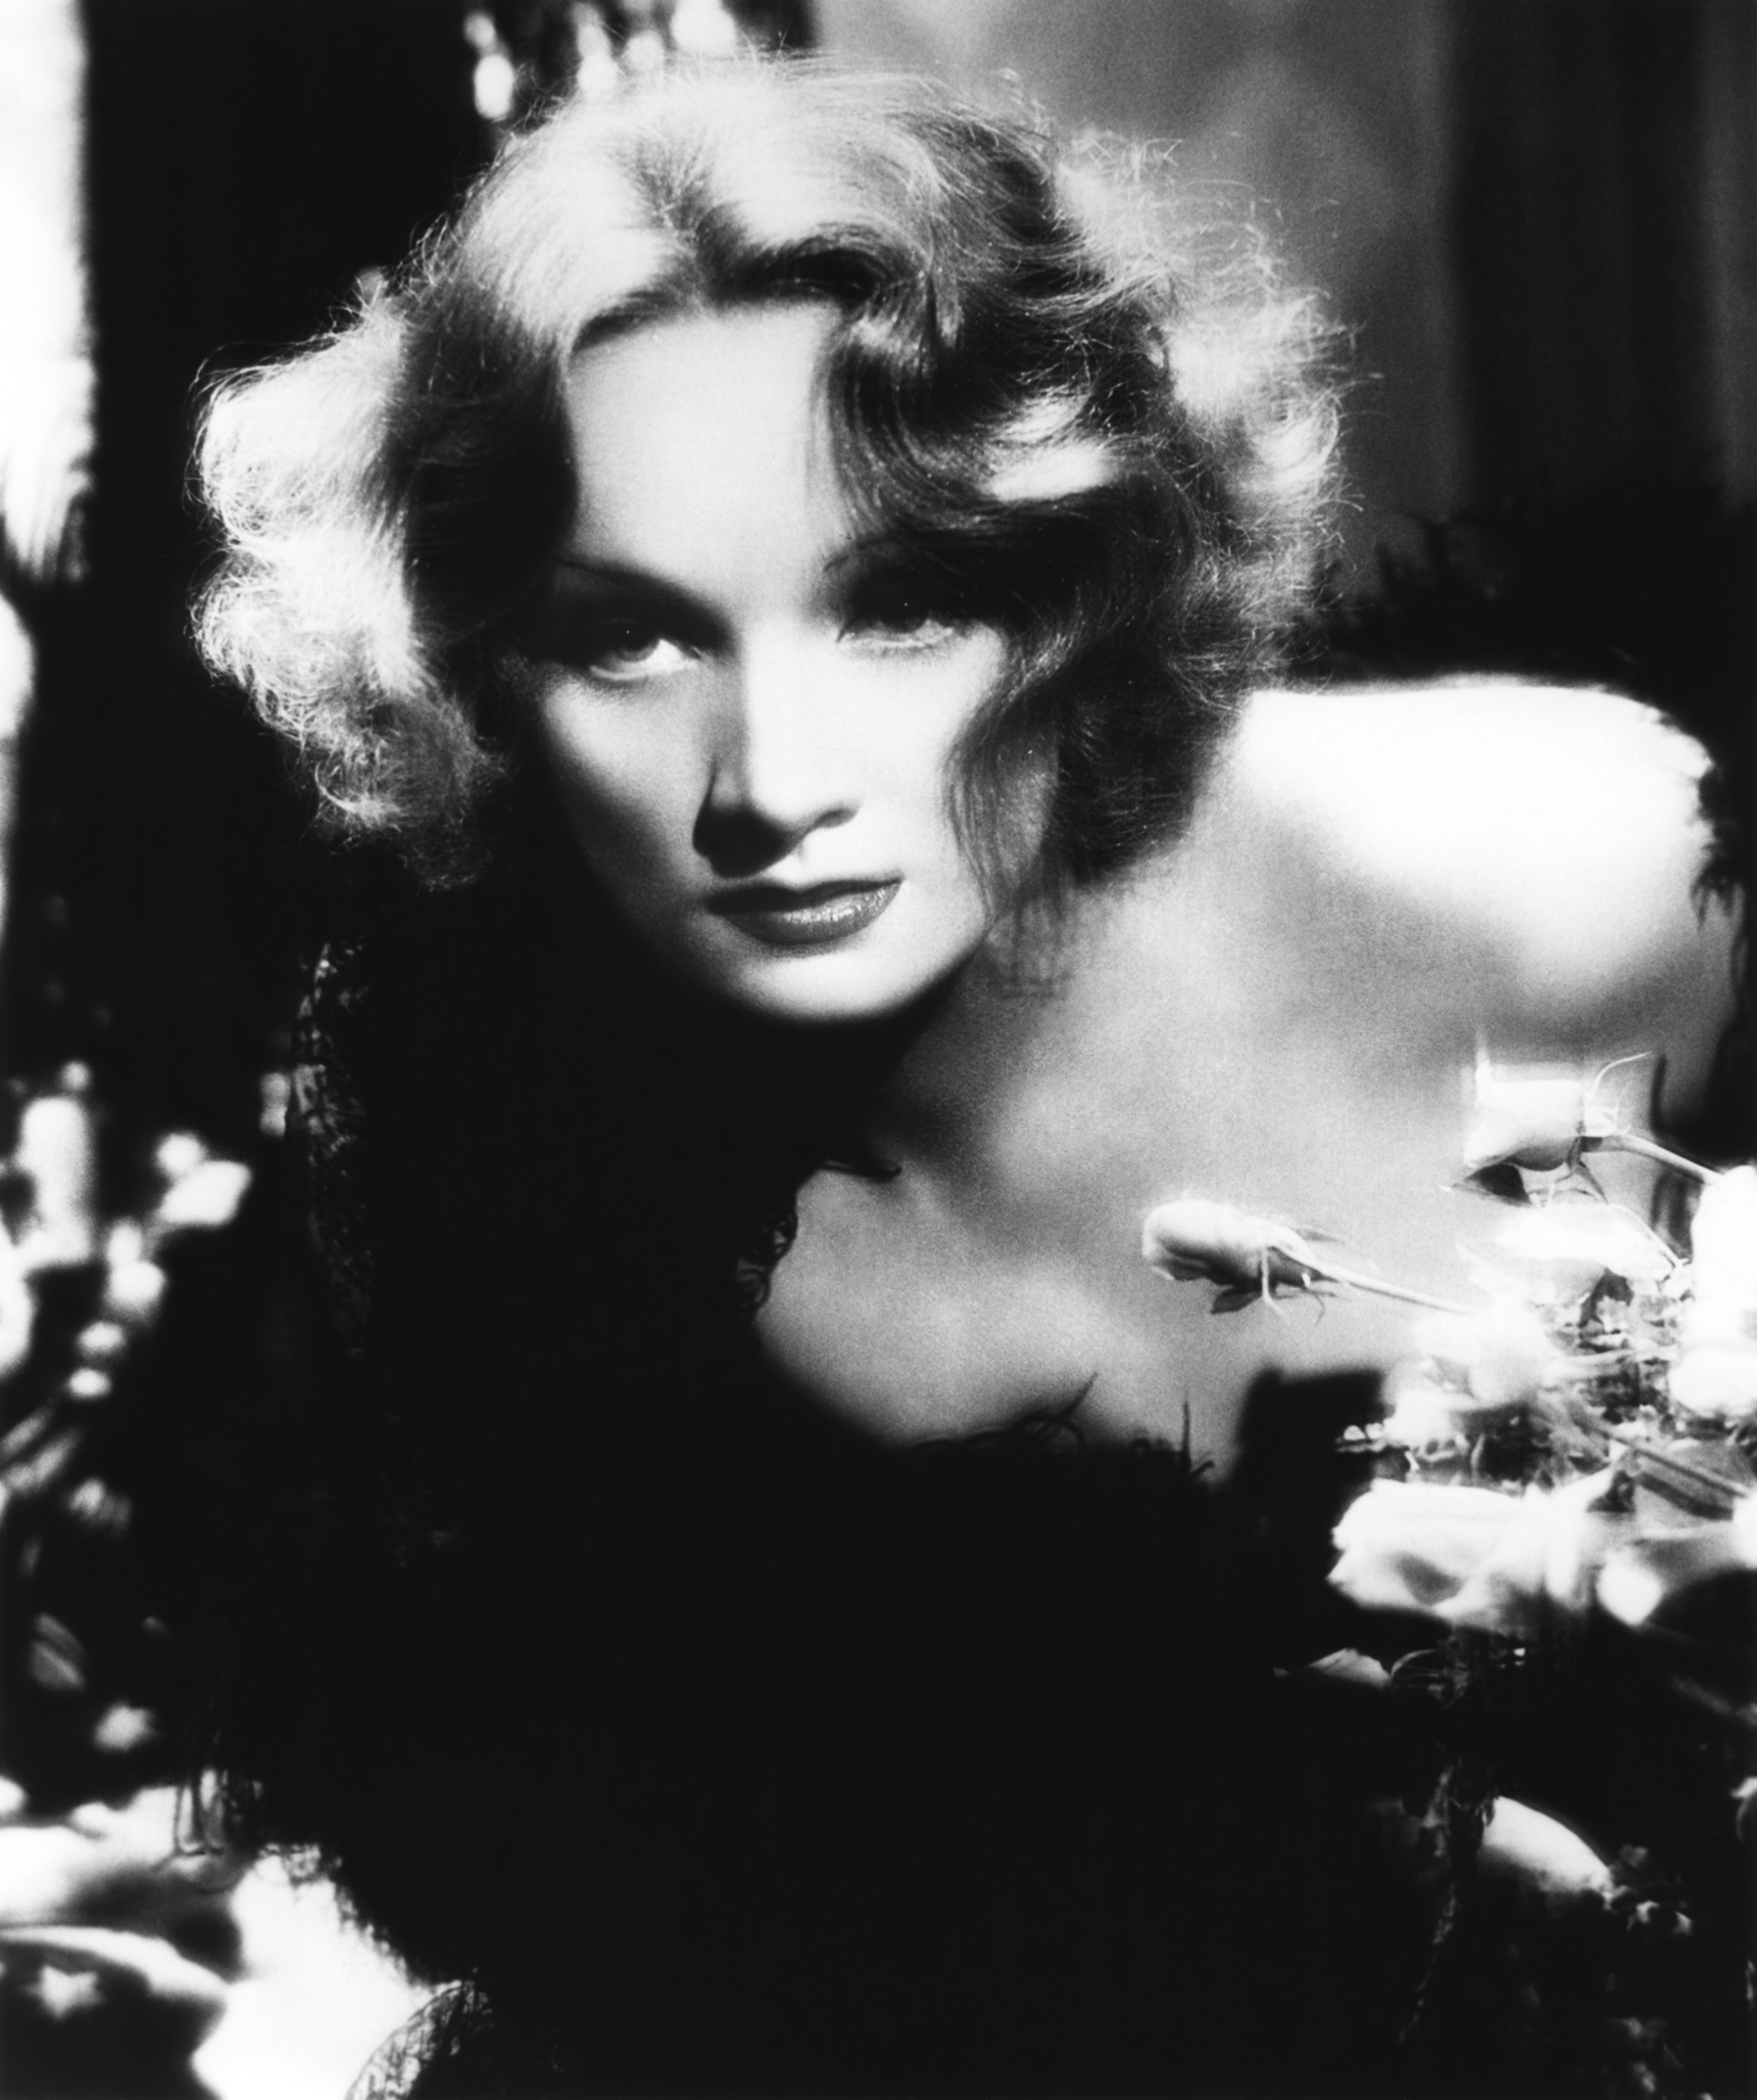 In the 1980s Marlene Dietrich